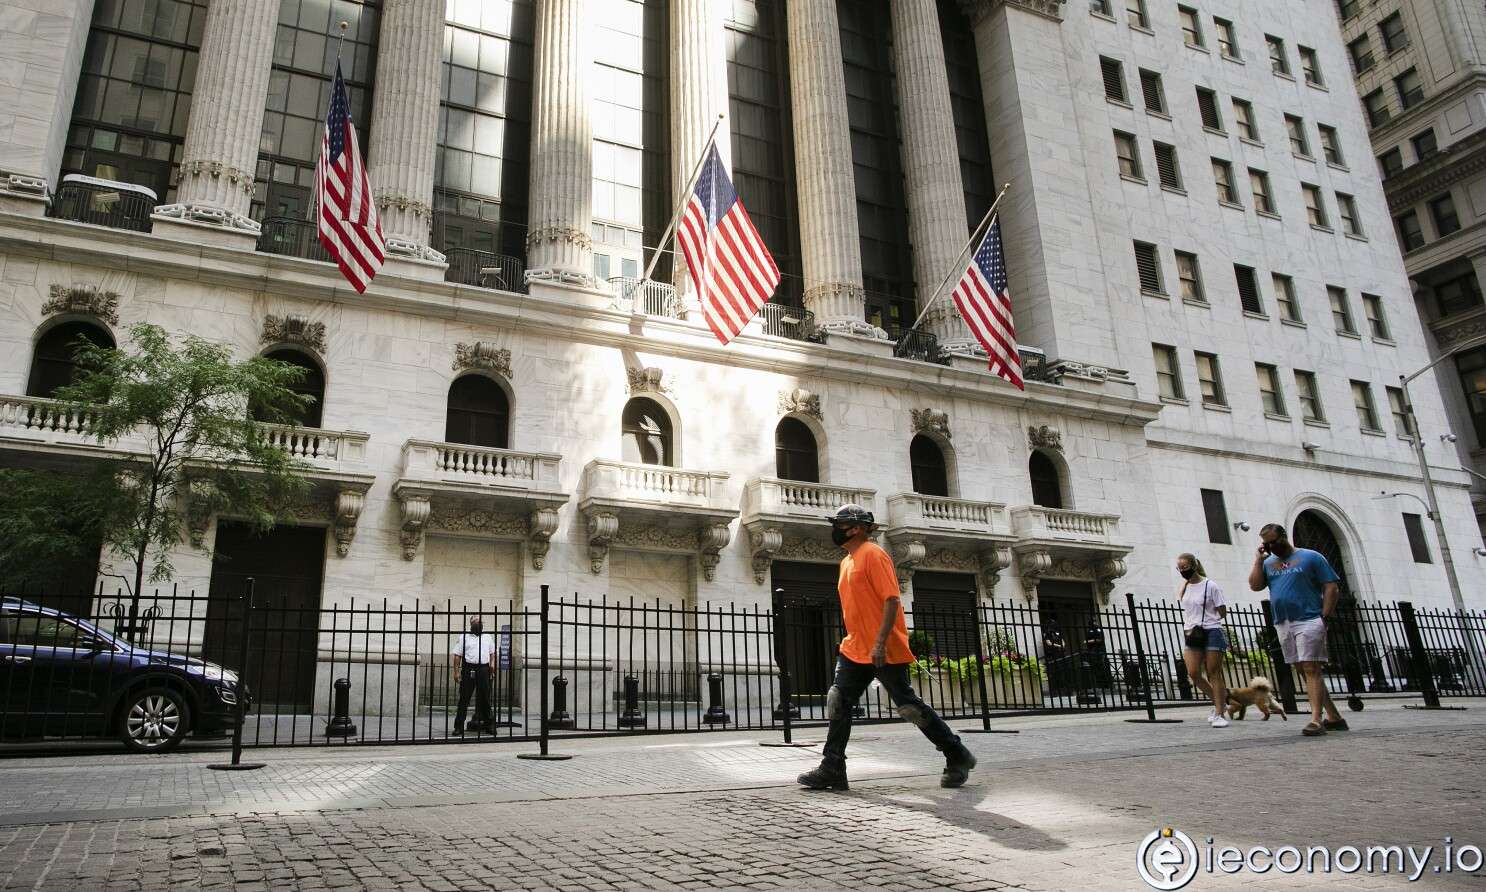 Despite inflation, Wall Street investors haven't been discouraged